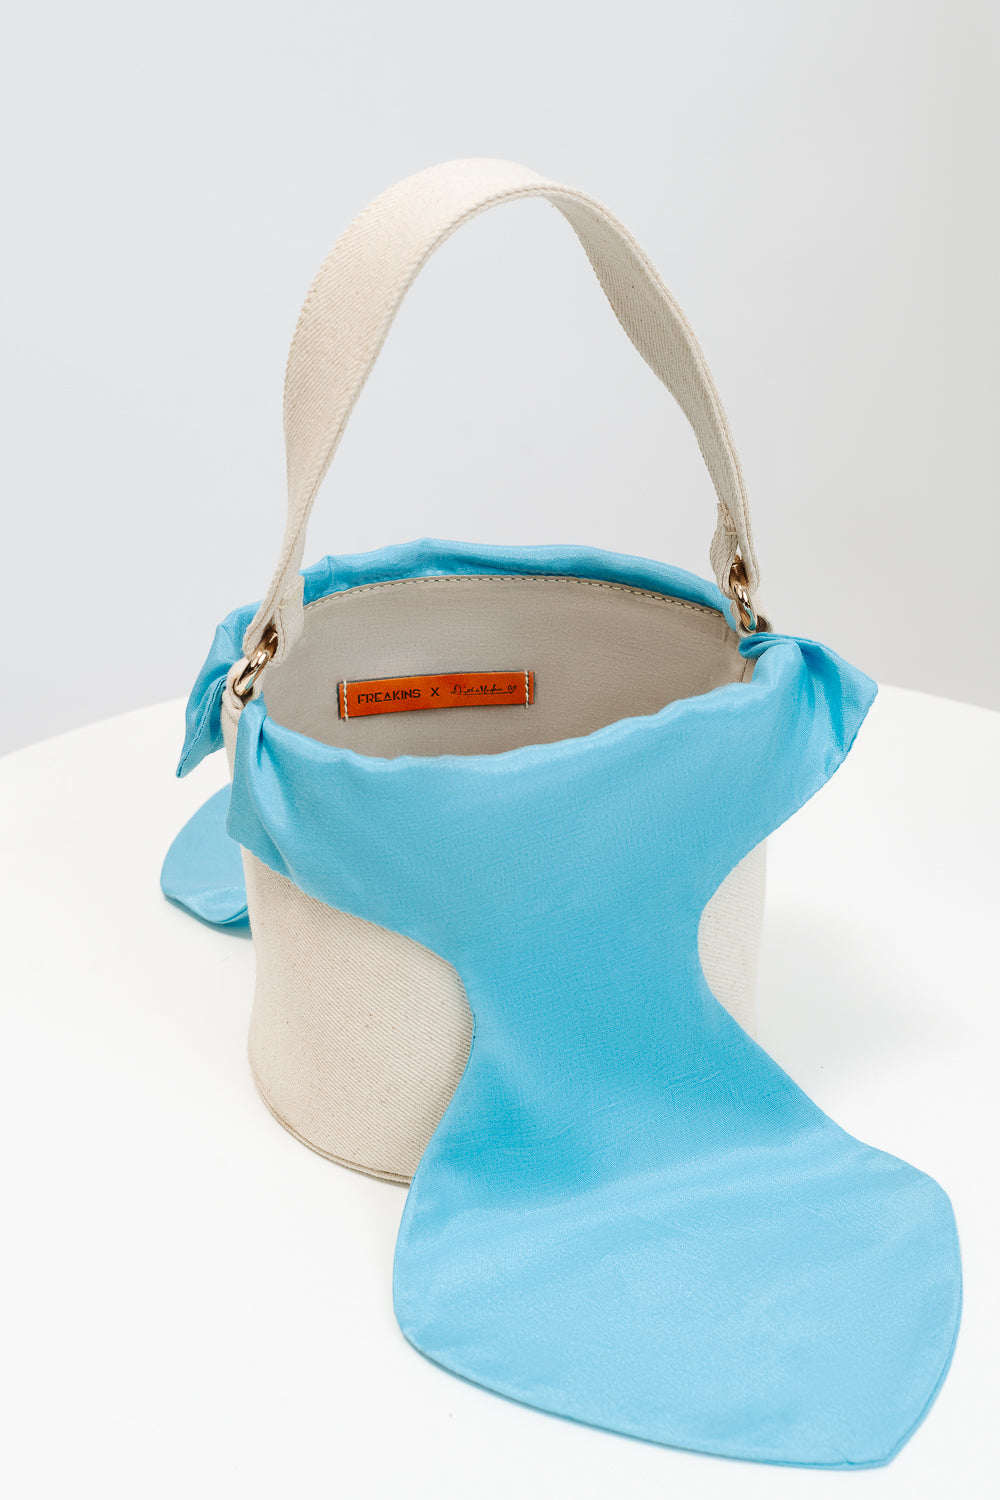 The White-Blue Bucket Bag